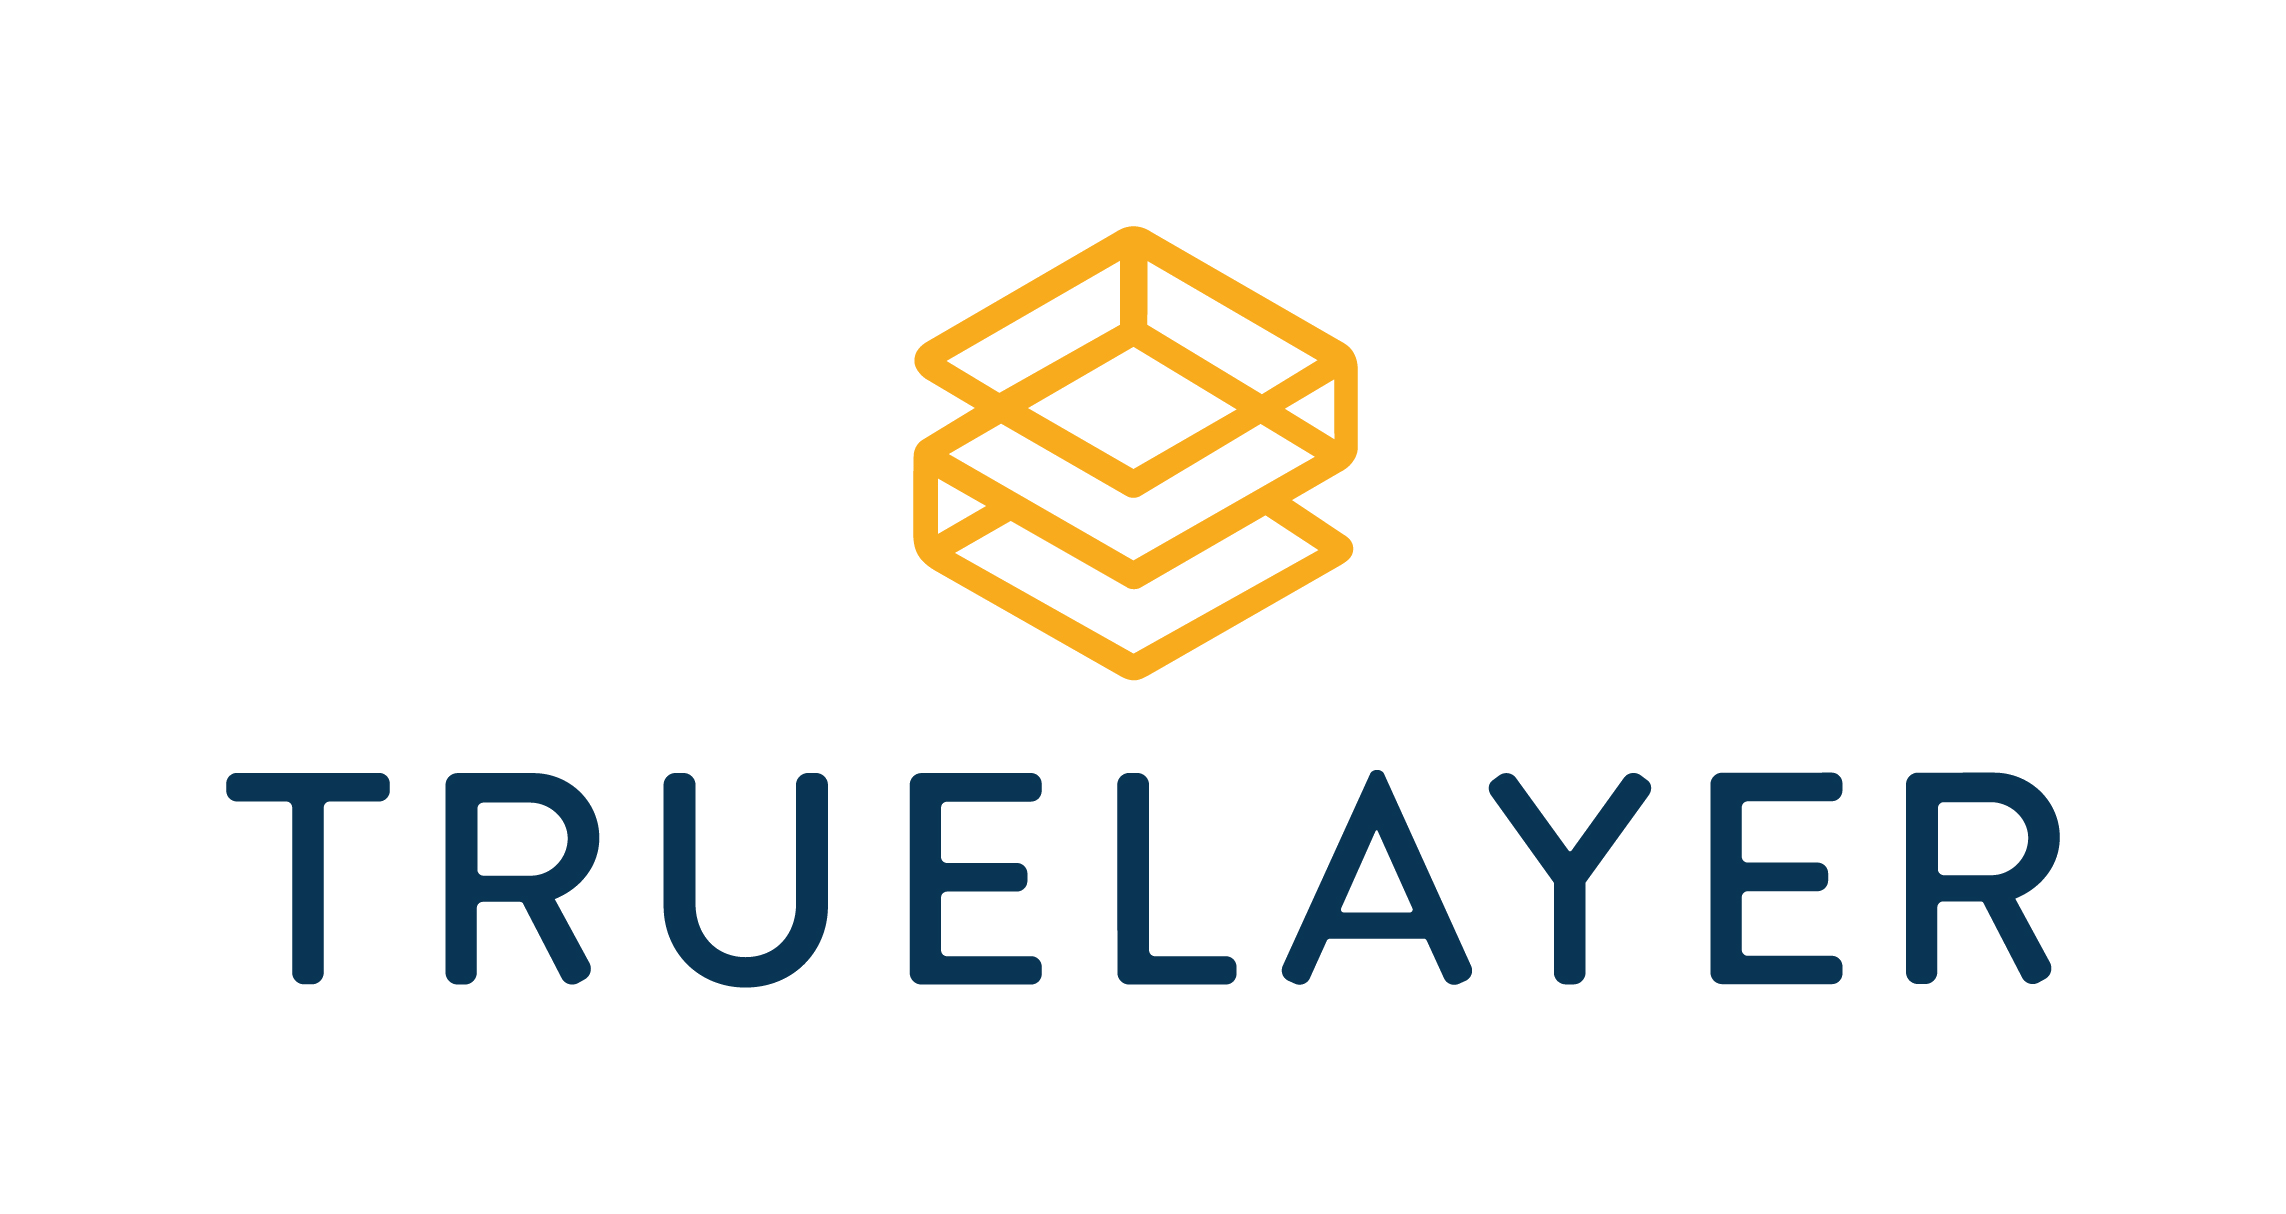 TrueLayer's logo